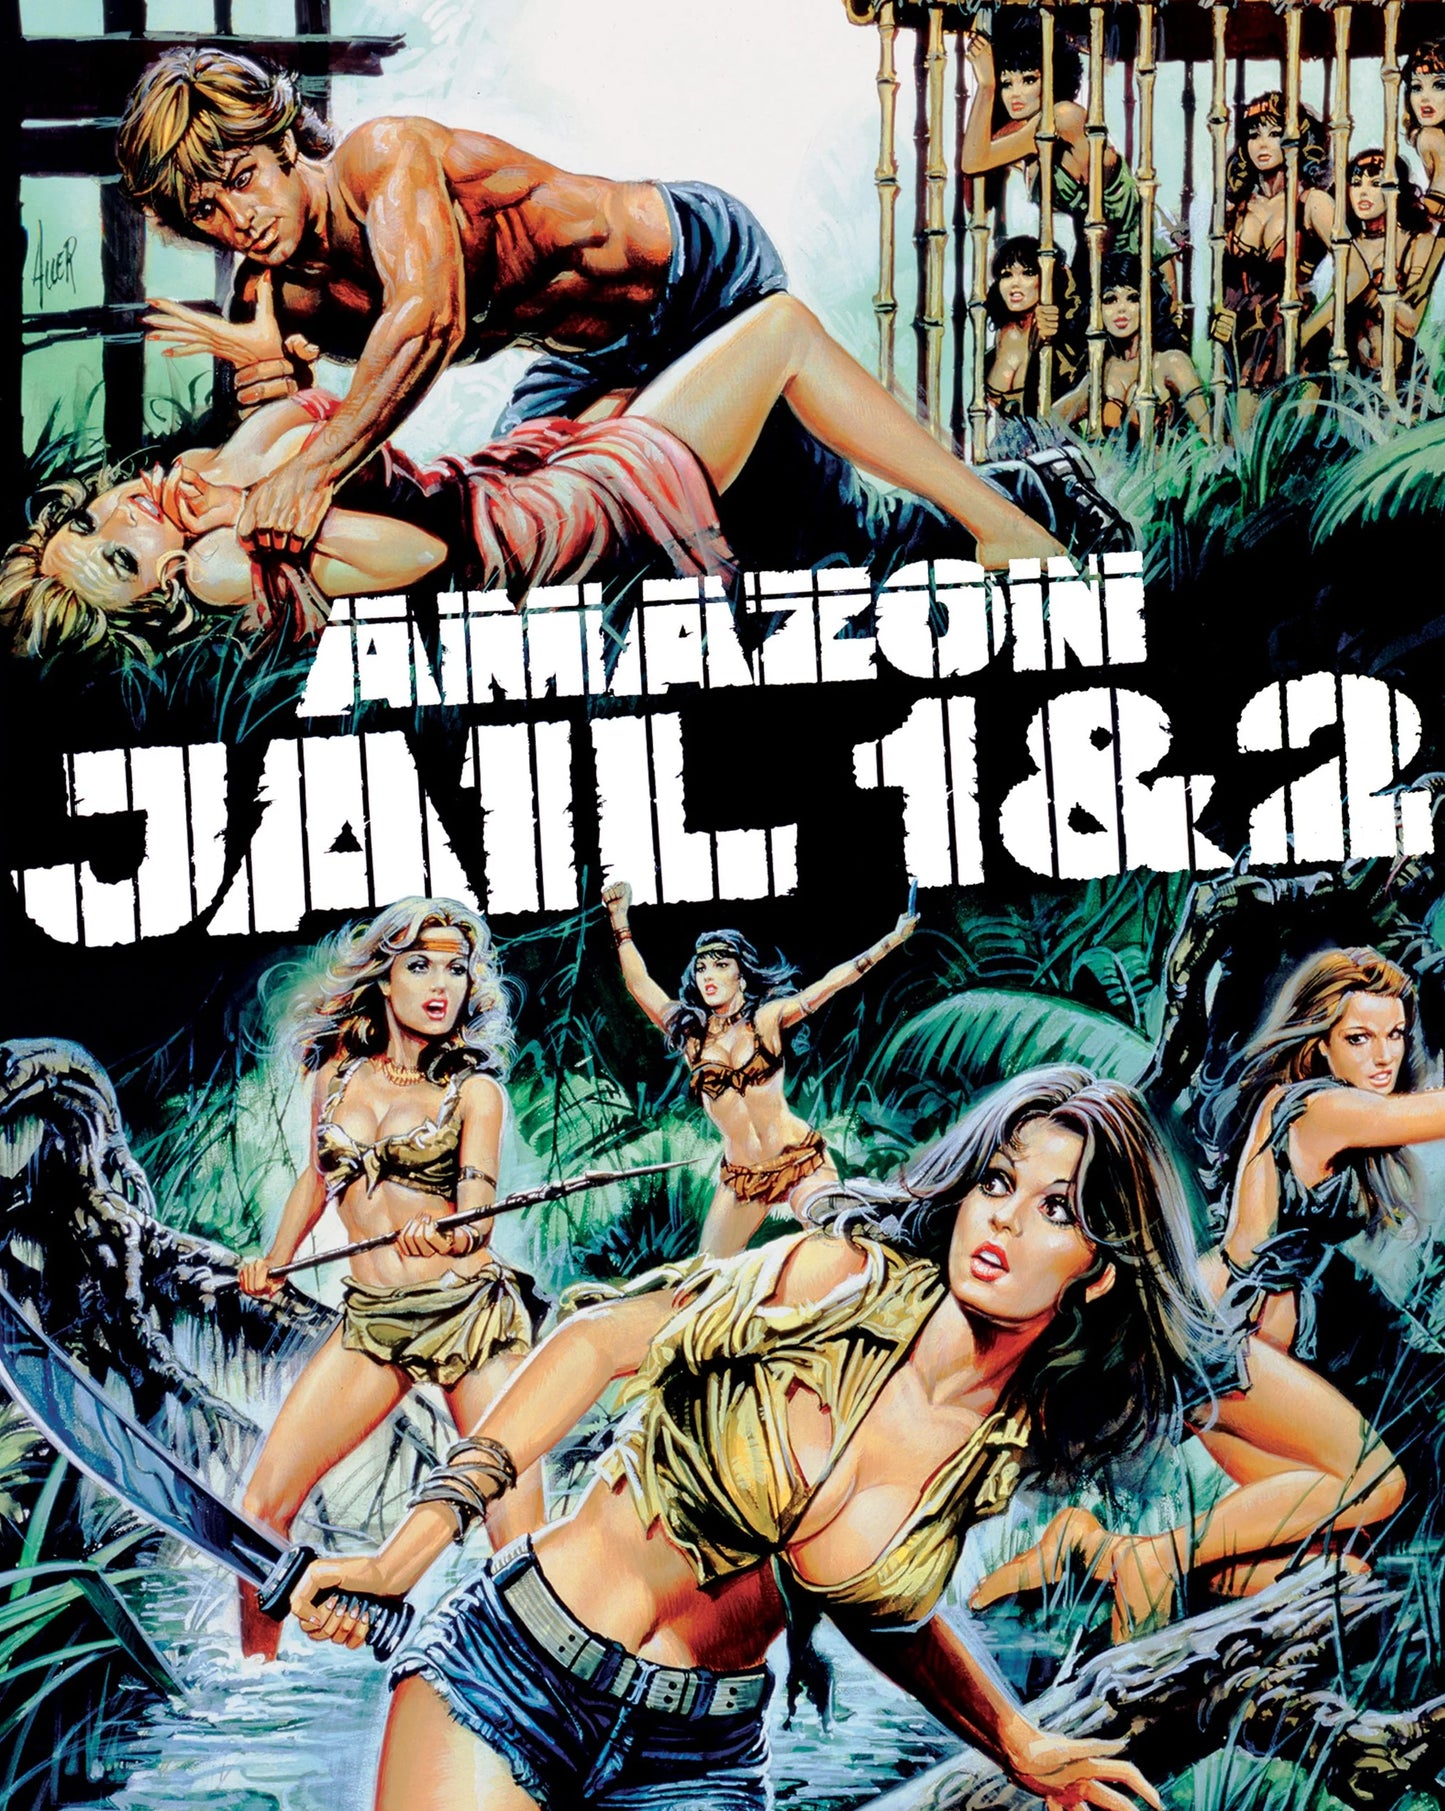 Amazon Jail / Amazon Jail II Limited Edition Vinegar Syndrome Blu-Ray [NEW] [SLIPCOVER]